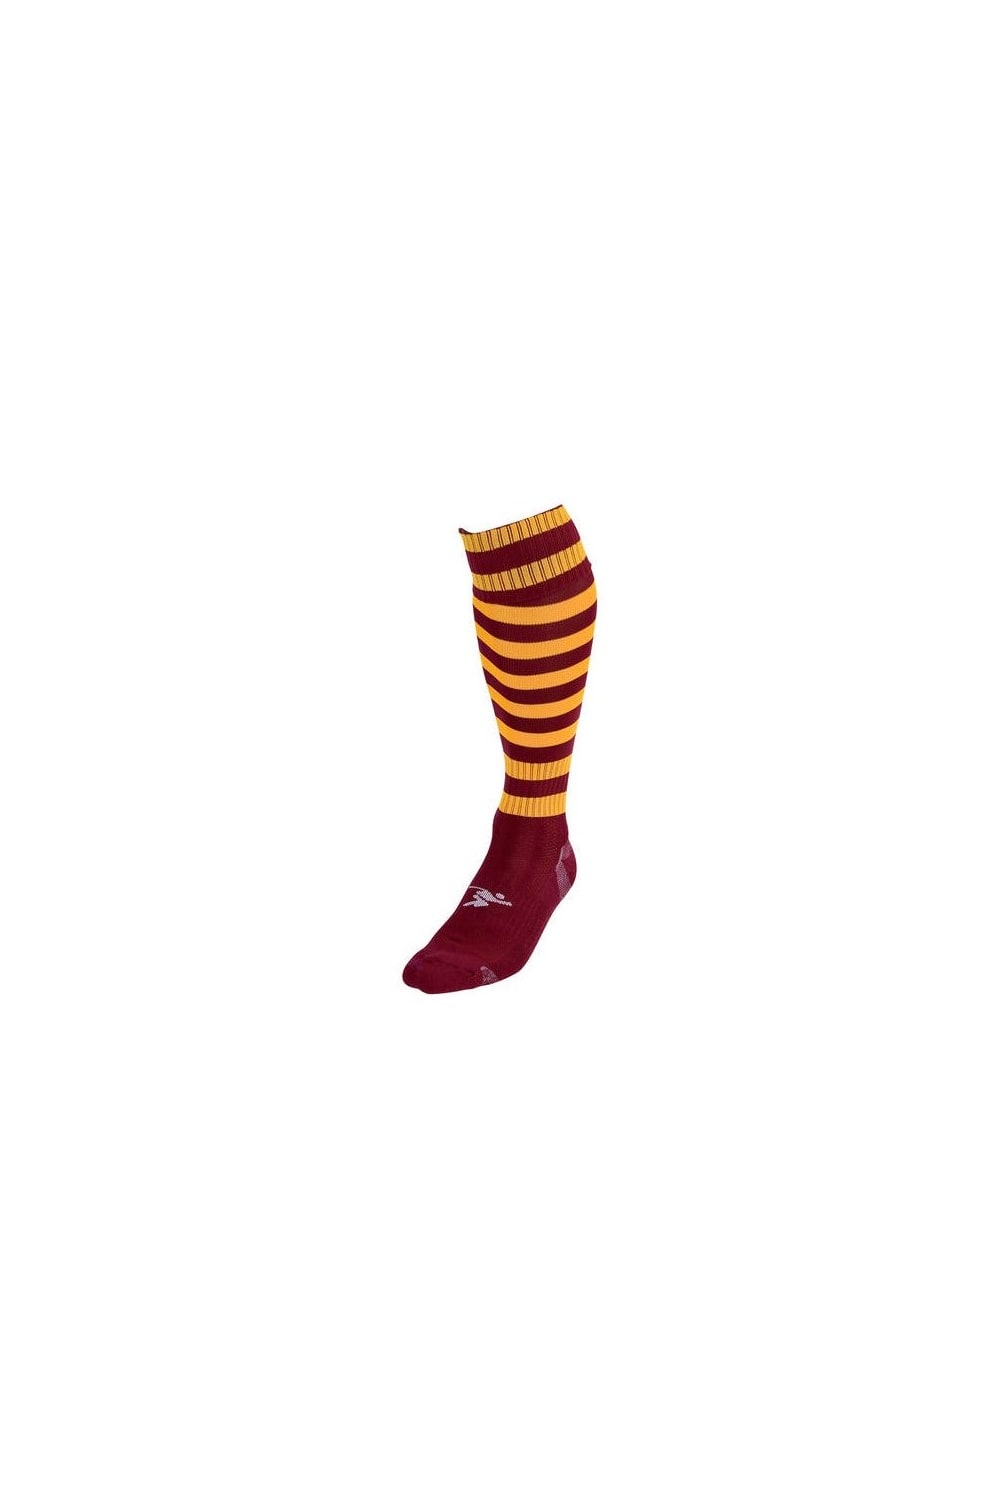 Precision Unisex Adult Pro Hooped Football Socks (Maroon/Amber Glow)